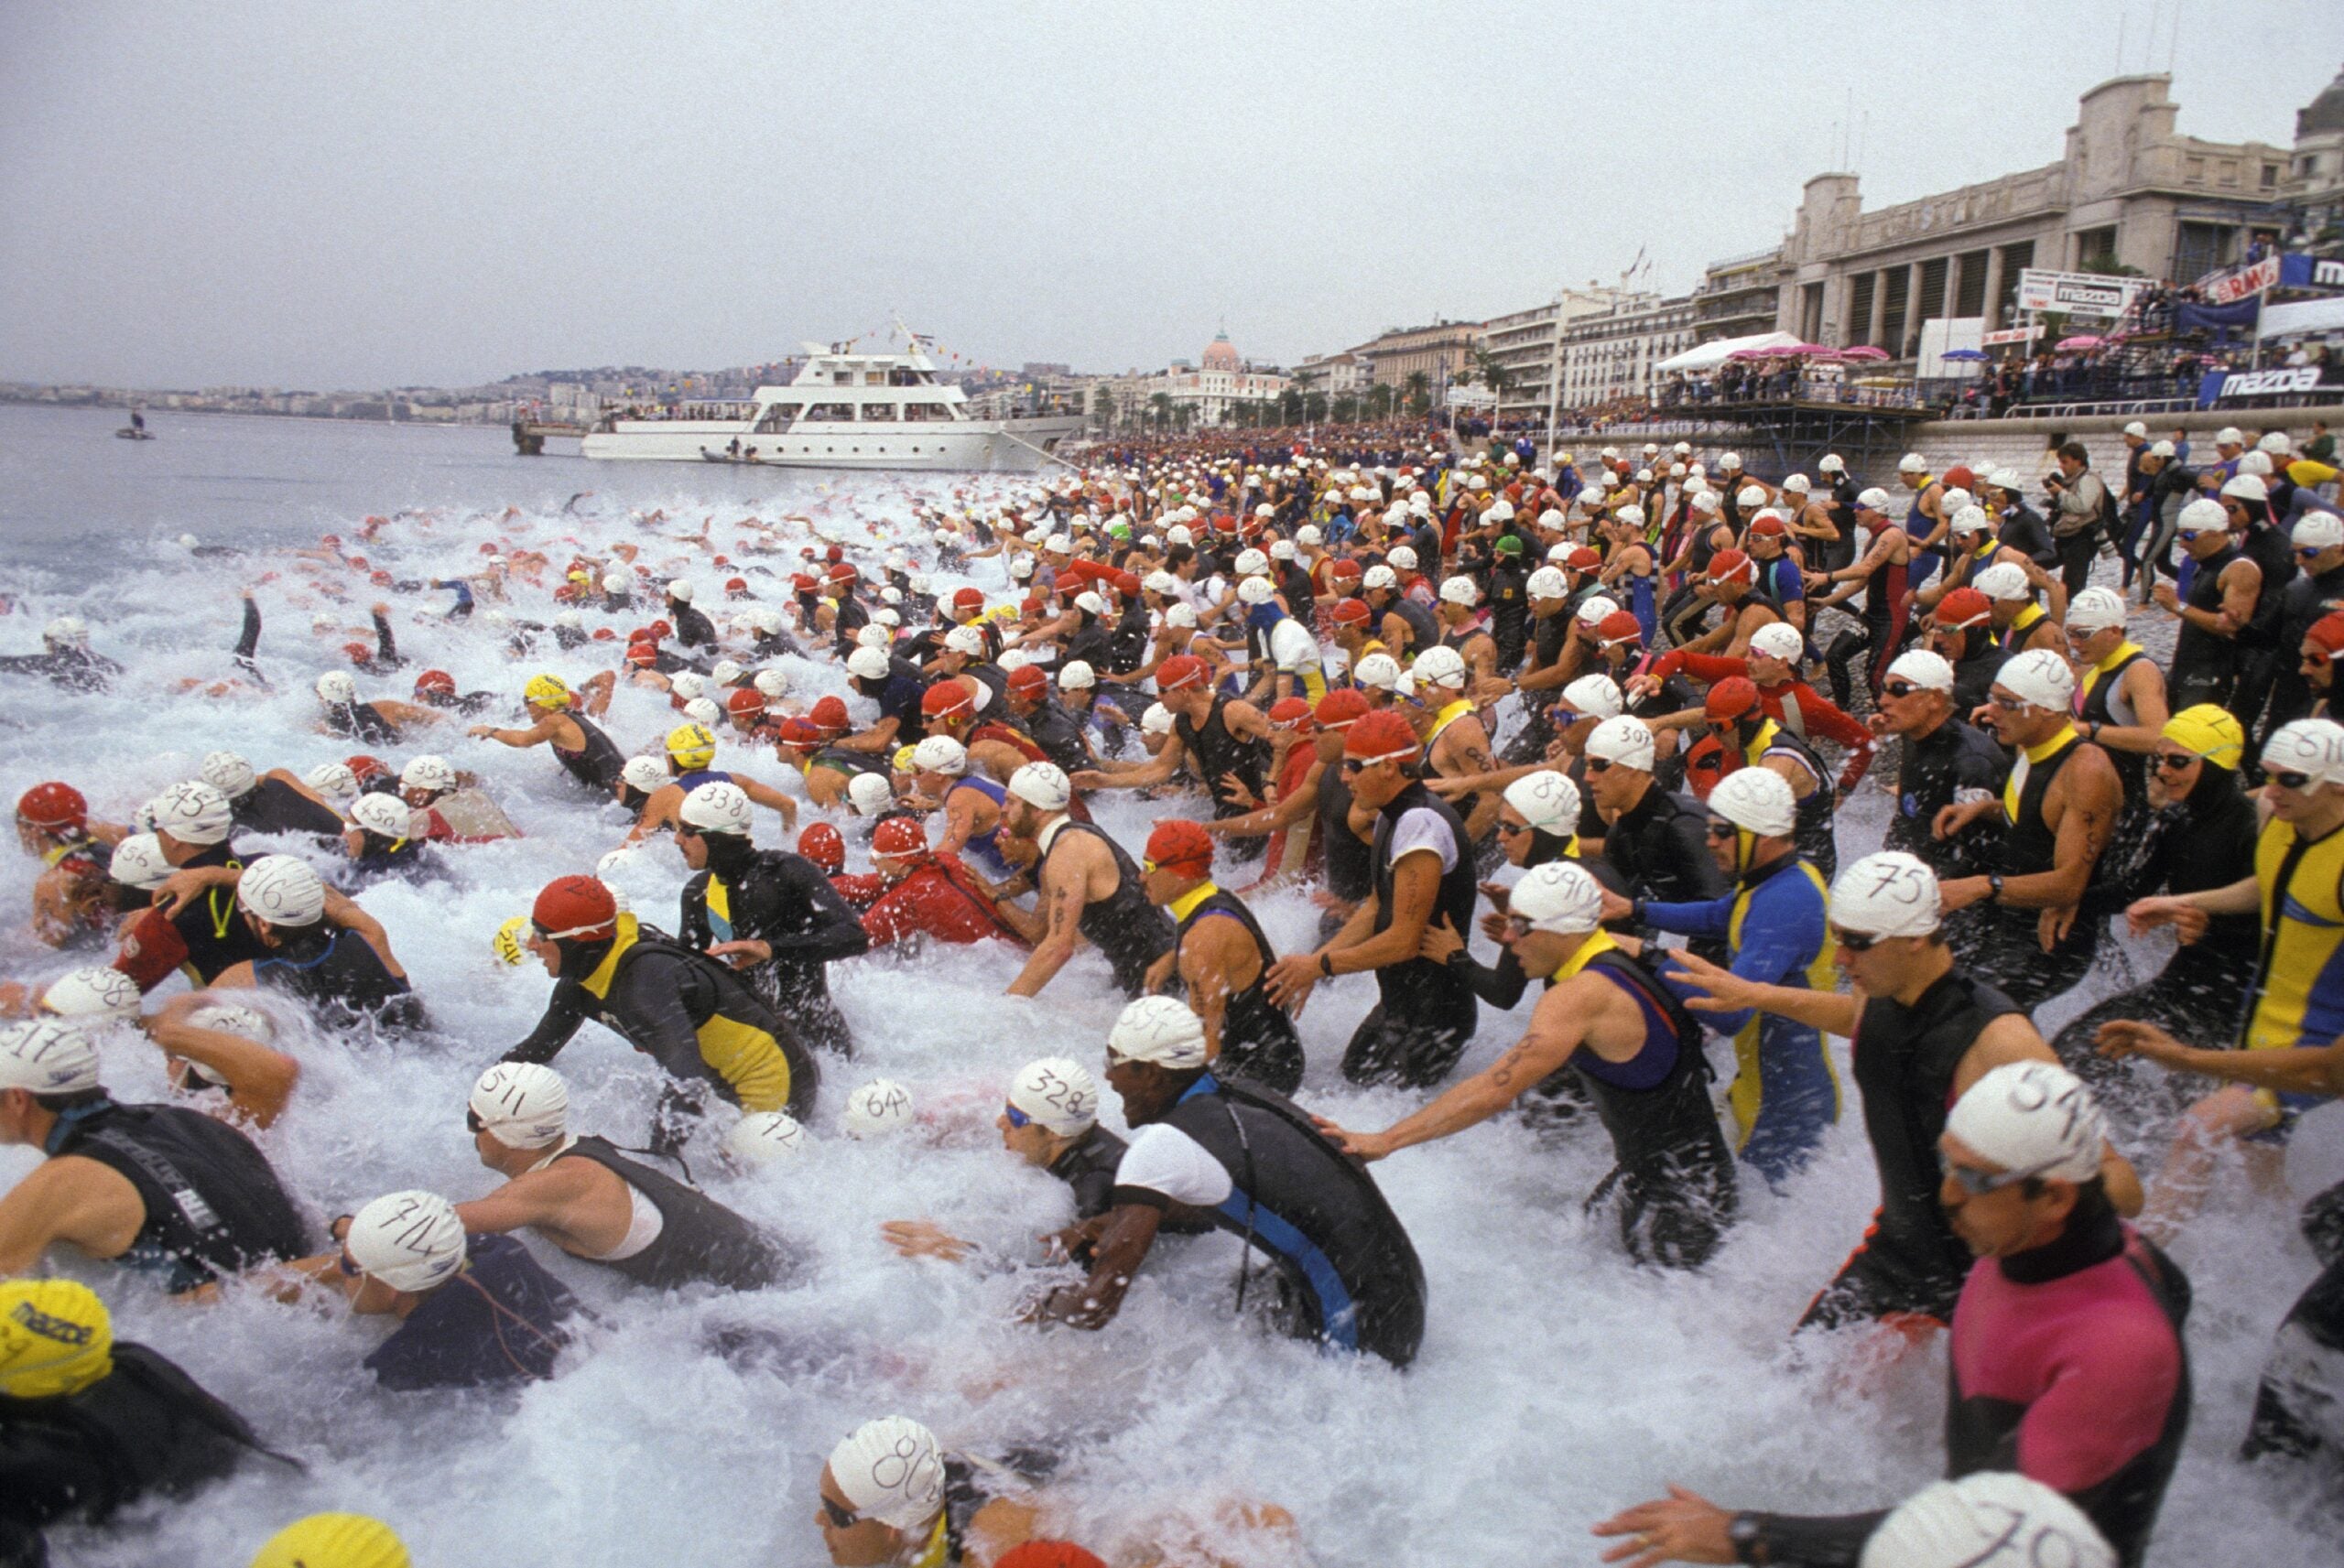 Triathlon competitors dive in at the Nice triathlon on October 25, 1987.